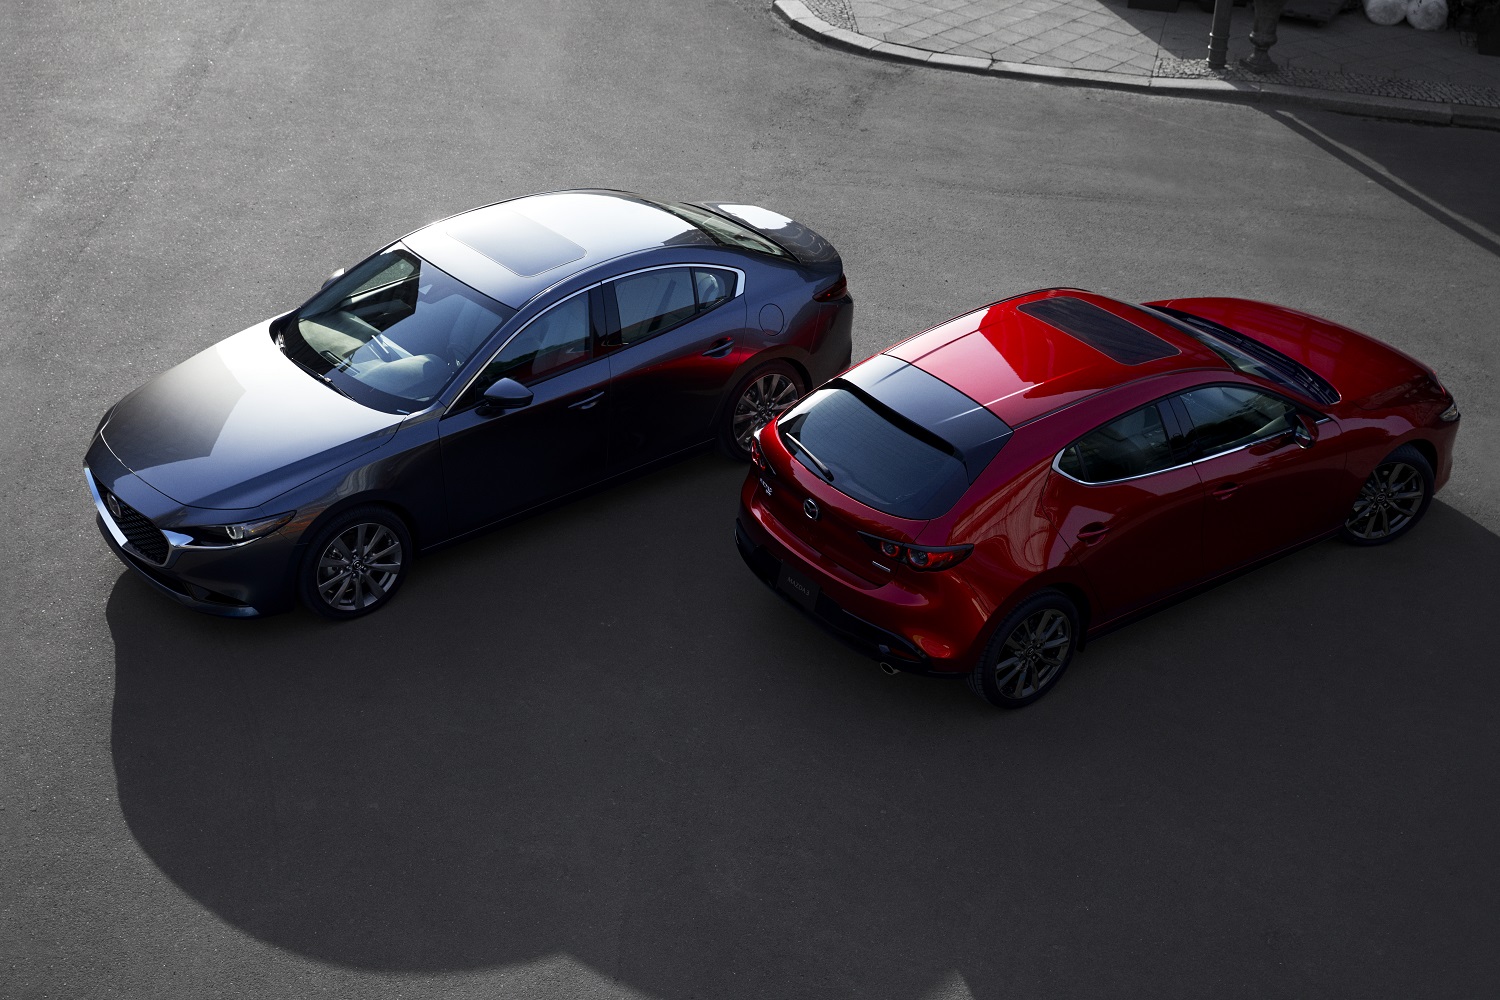 2019 Mazda3 official